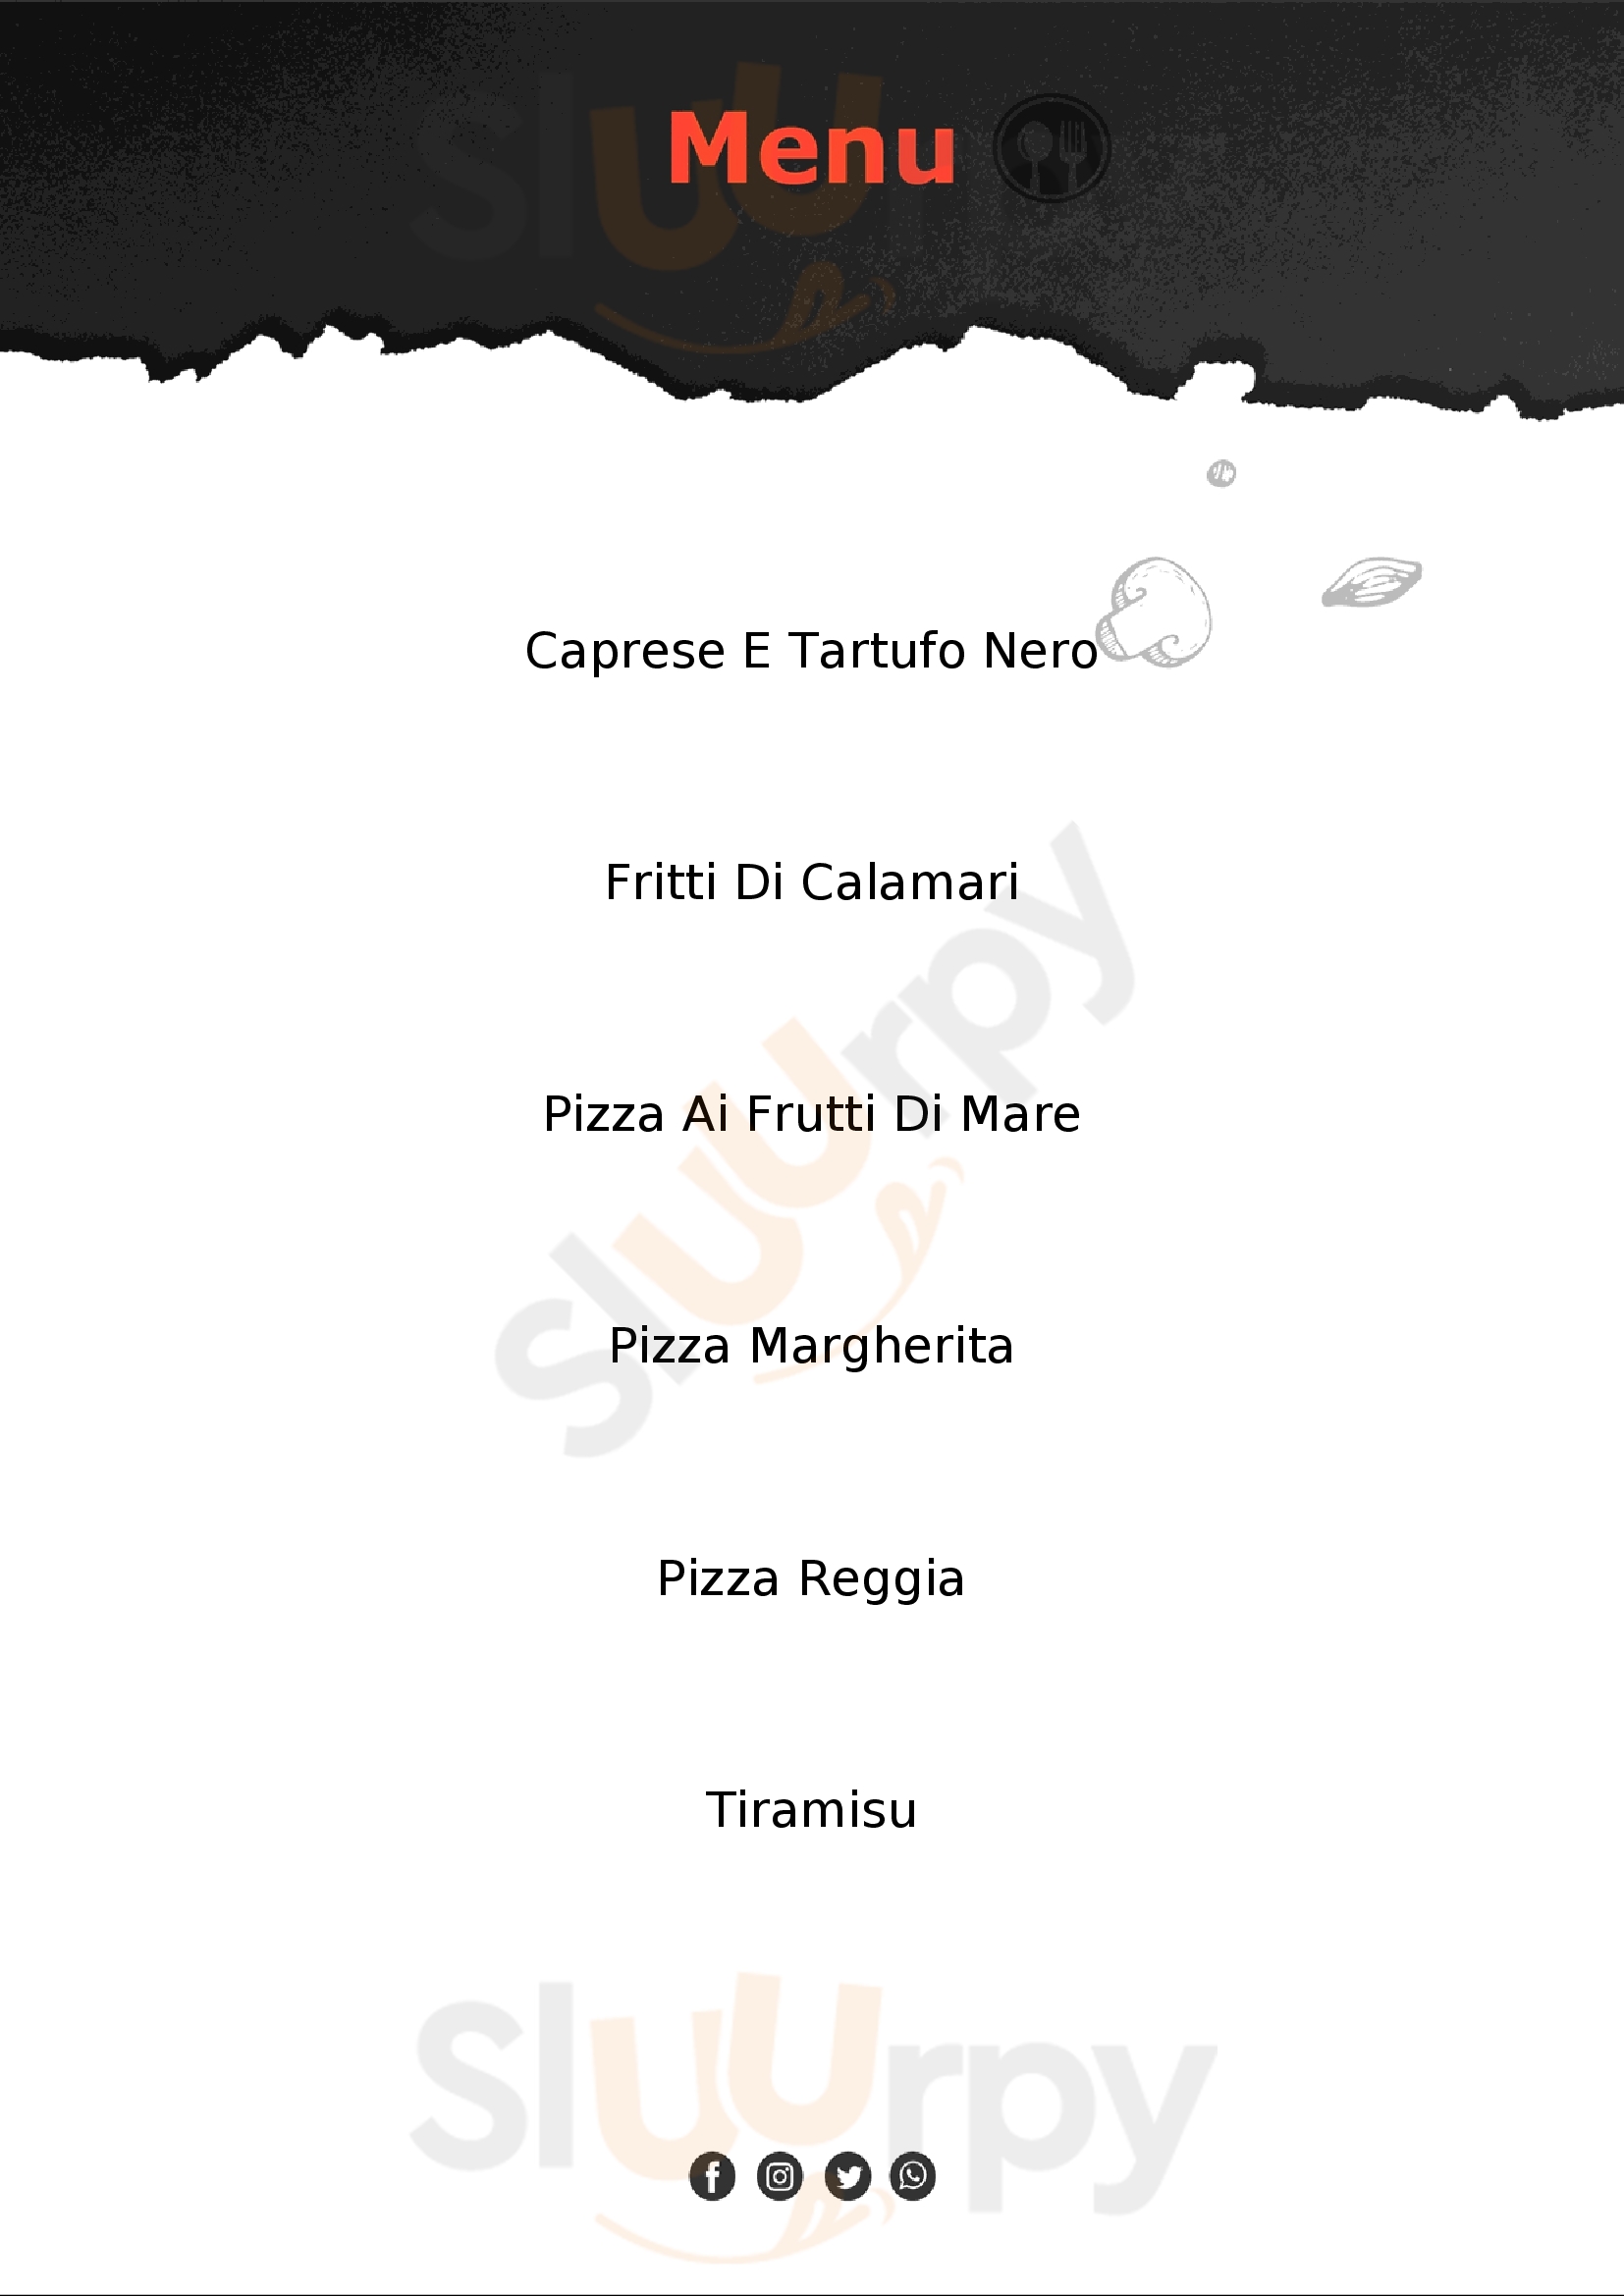 Pizzeria La Reggia Millesimo menù 1 pagina